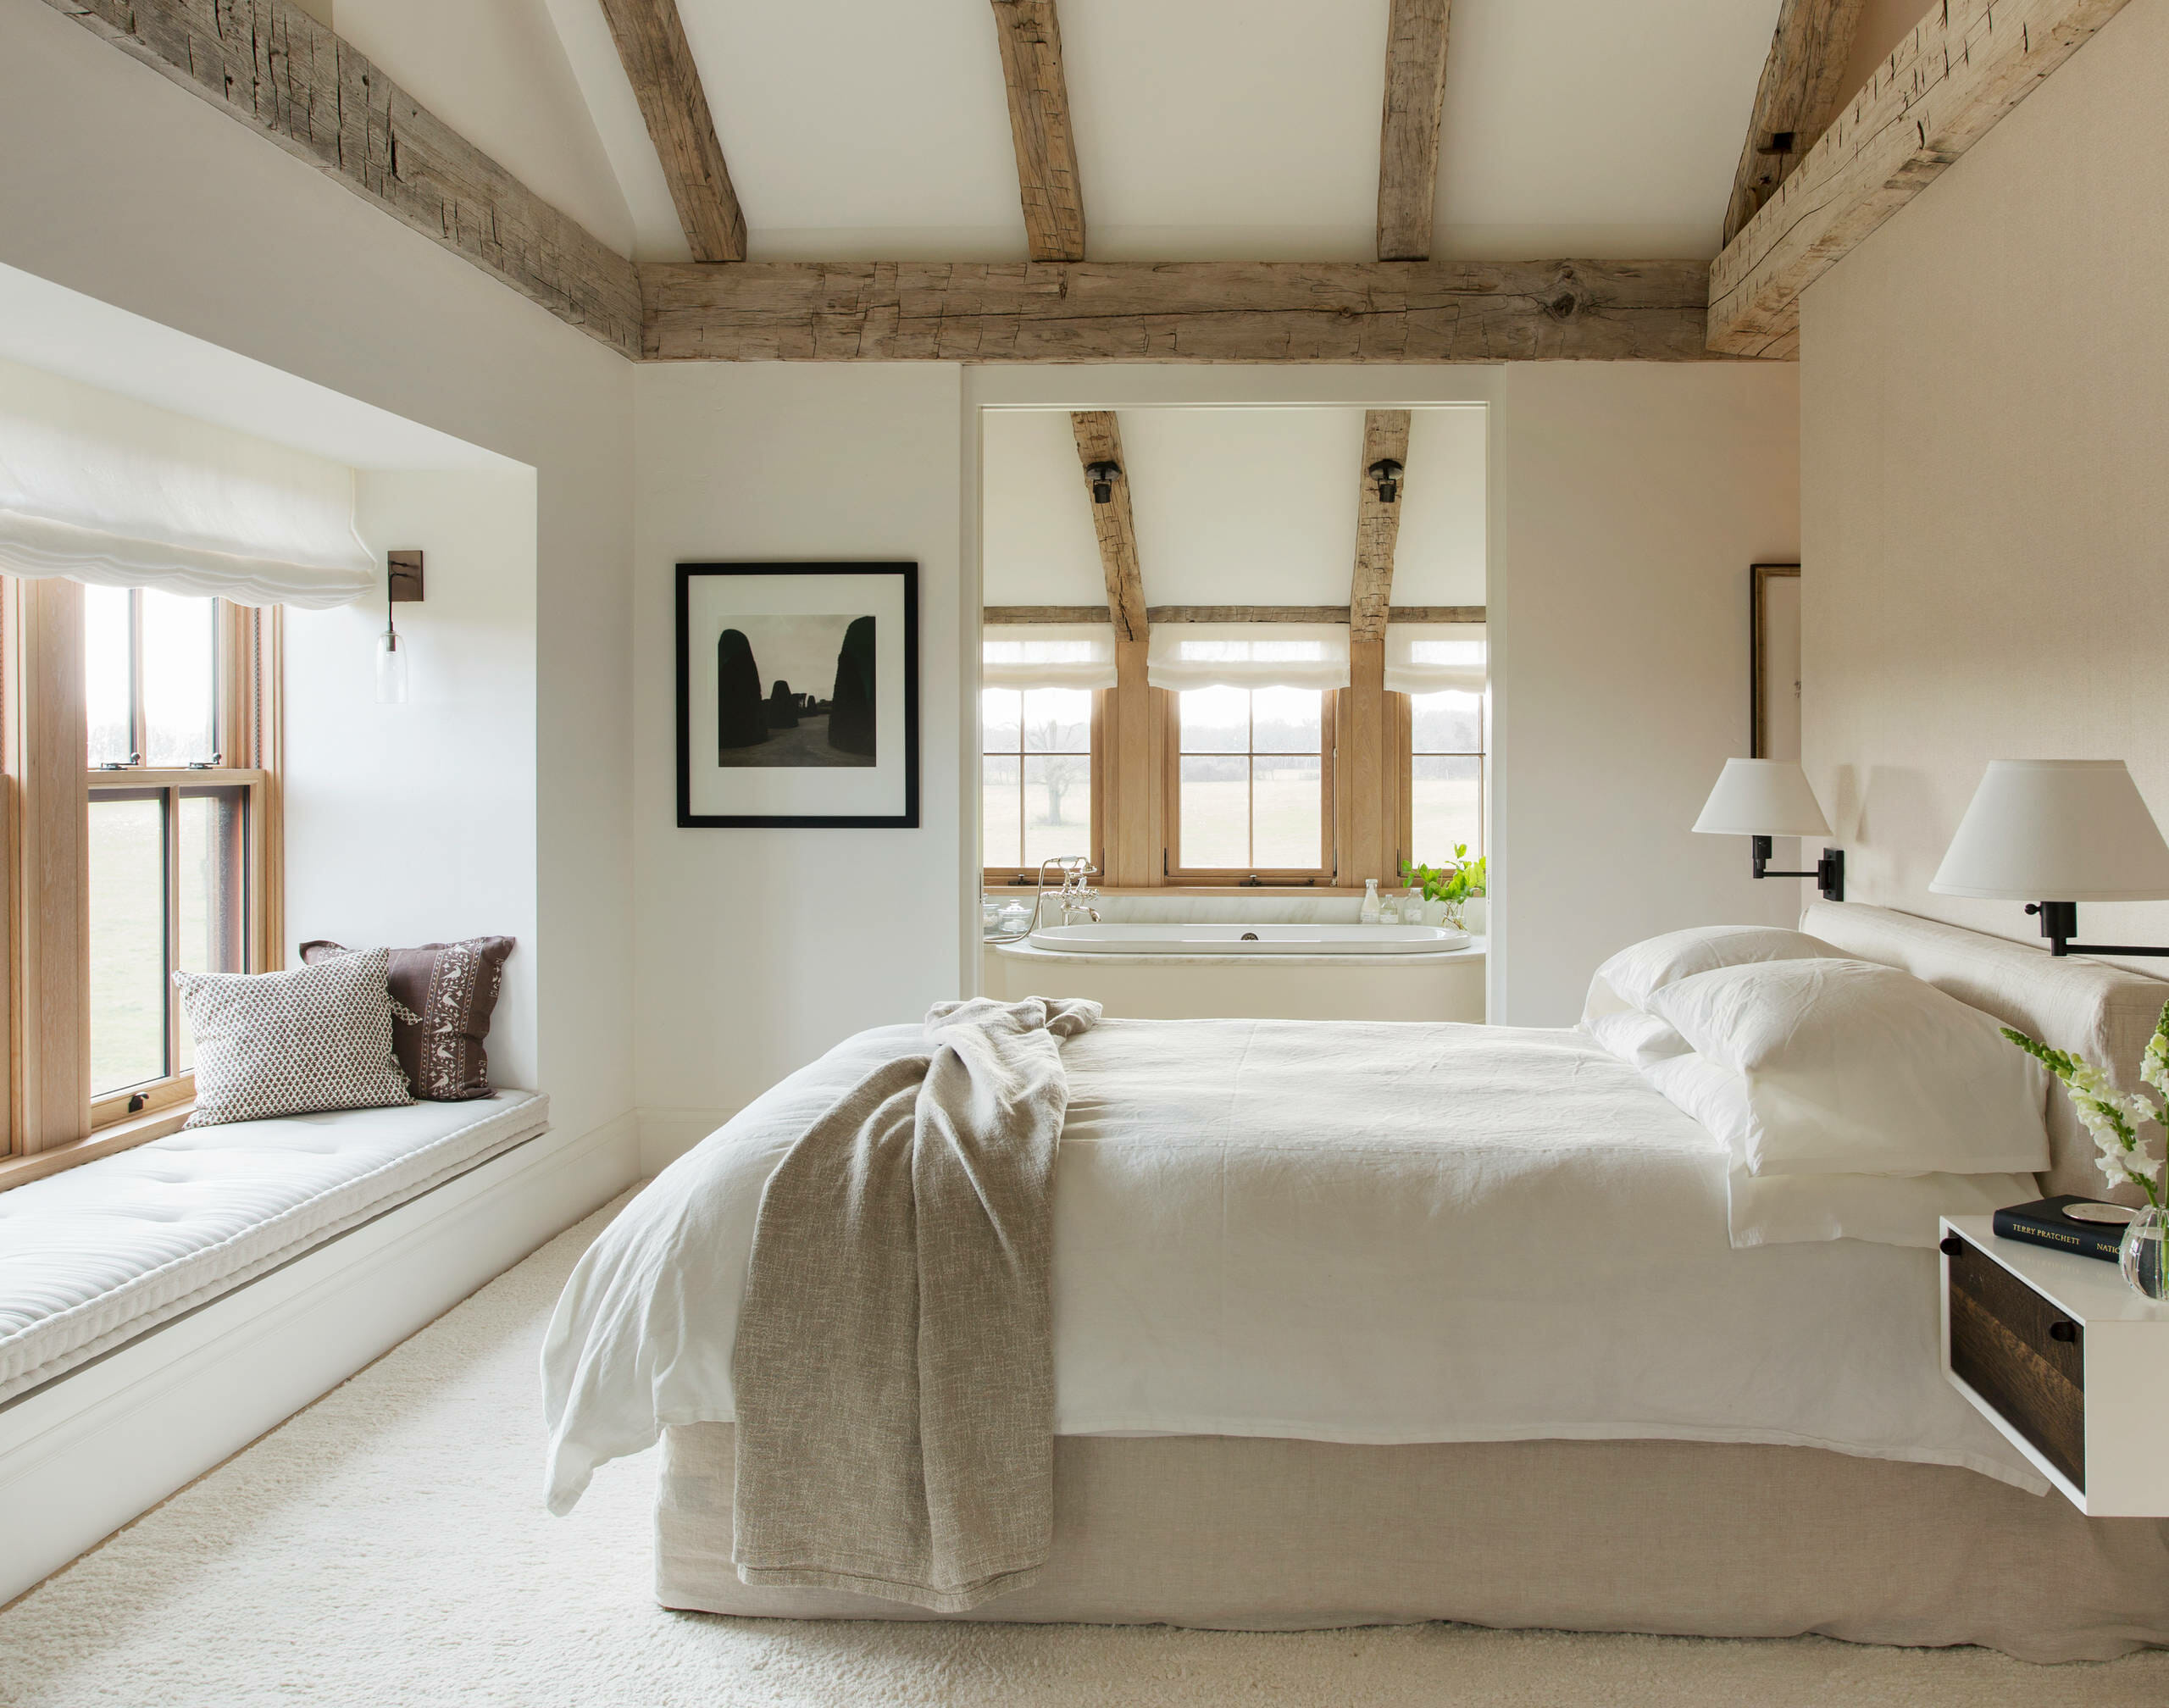 Simple bedroom design in modern farmhouse decor